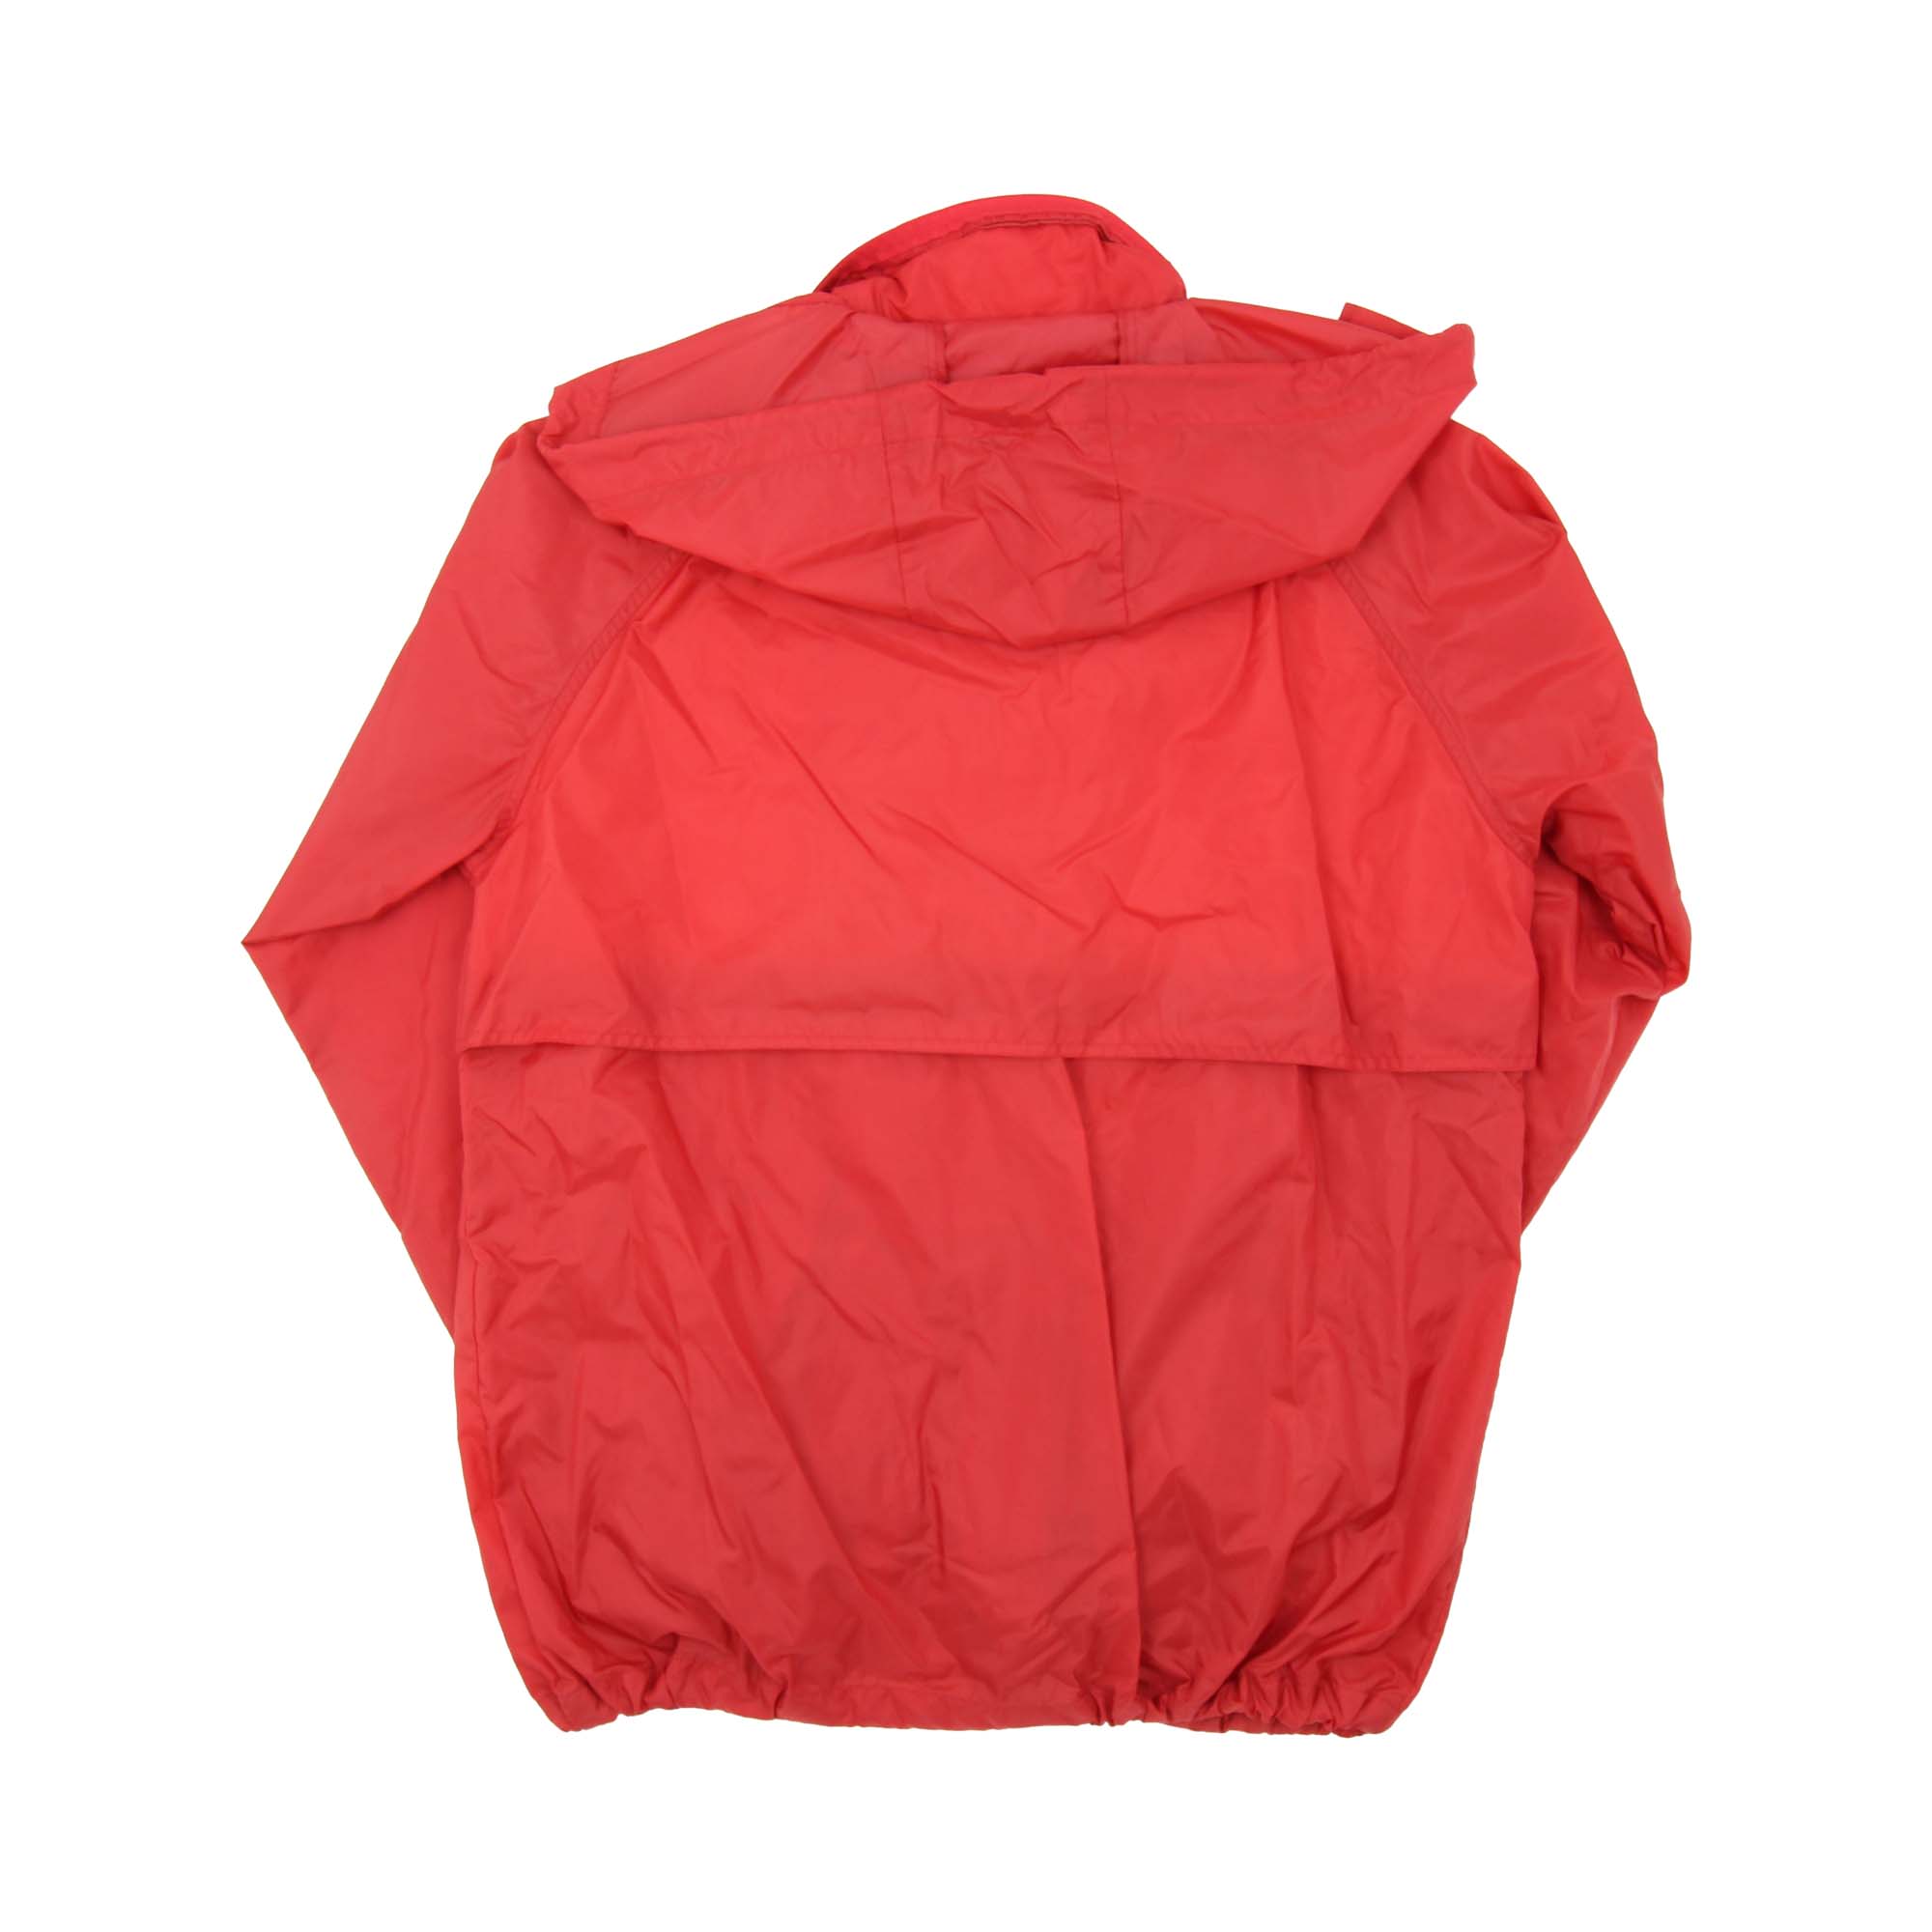 Acadia Rain Jacket Red - L